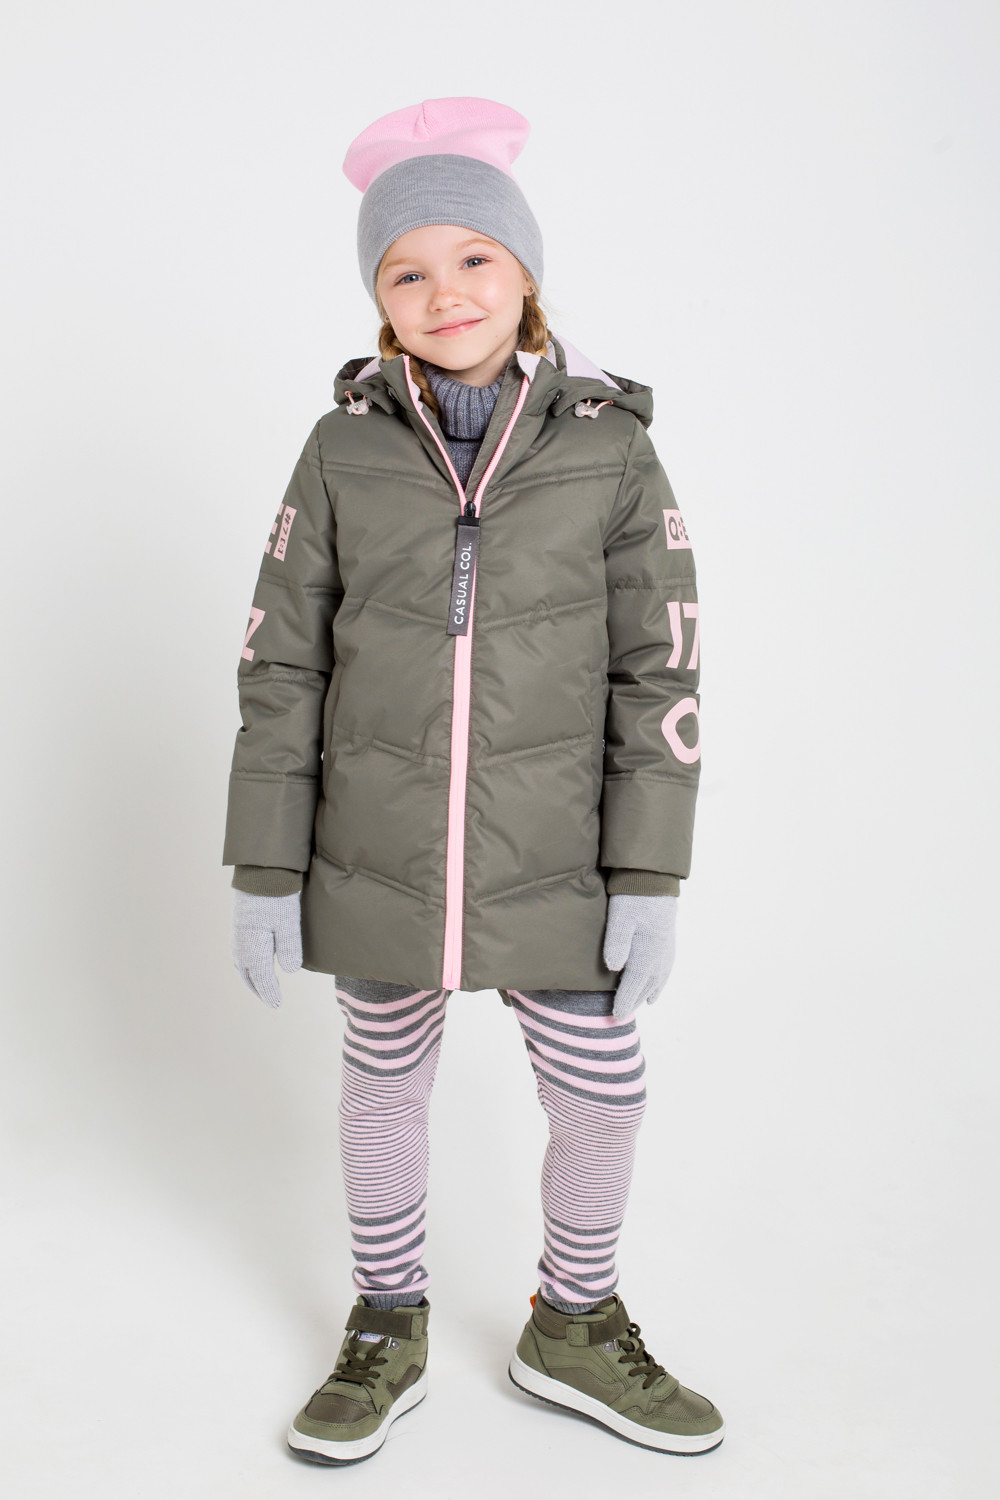 Фото товара Куртка зимняя для девочки ВК 38026/2 от Crockid (Крокид)